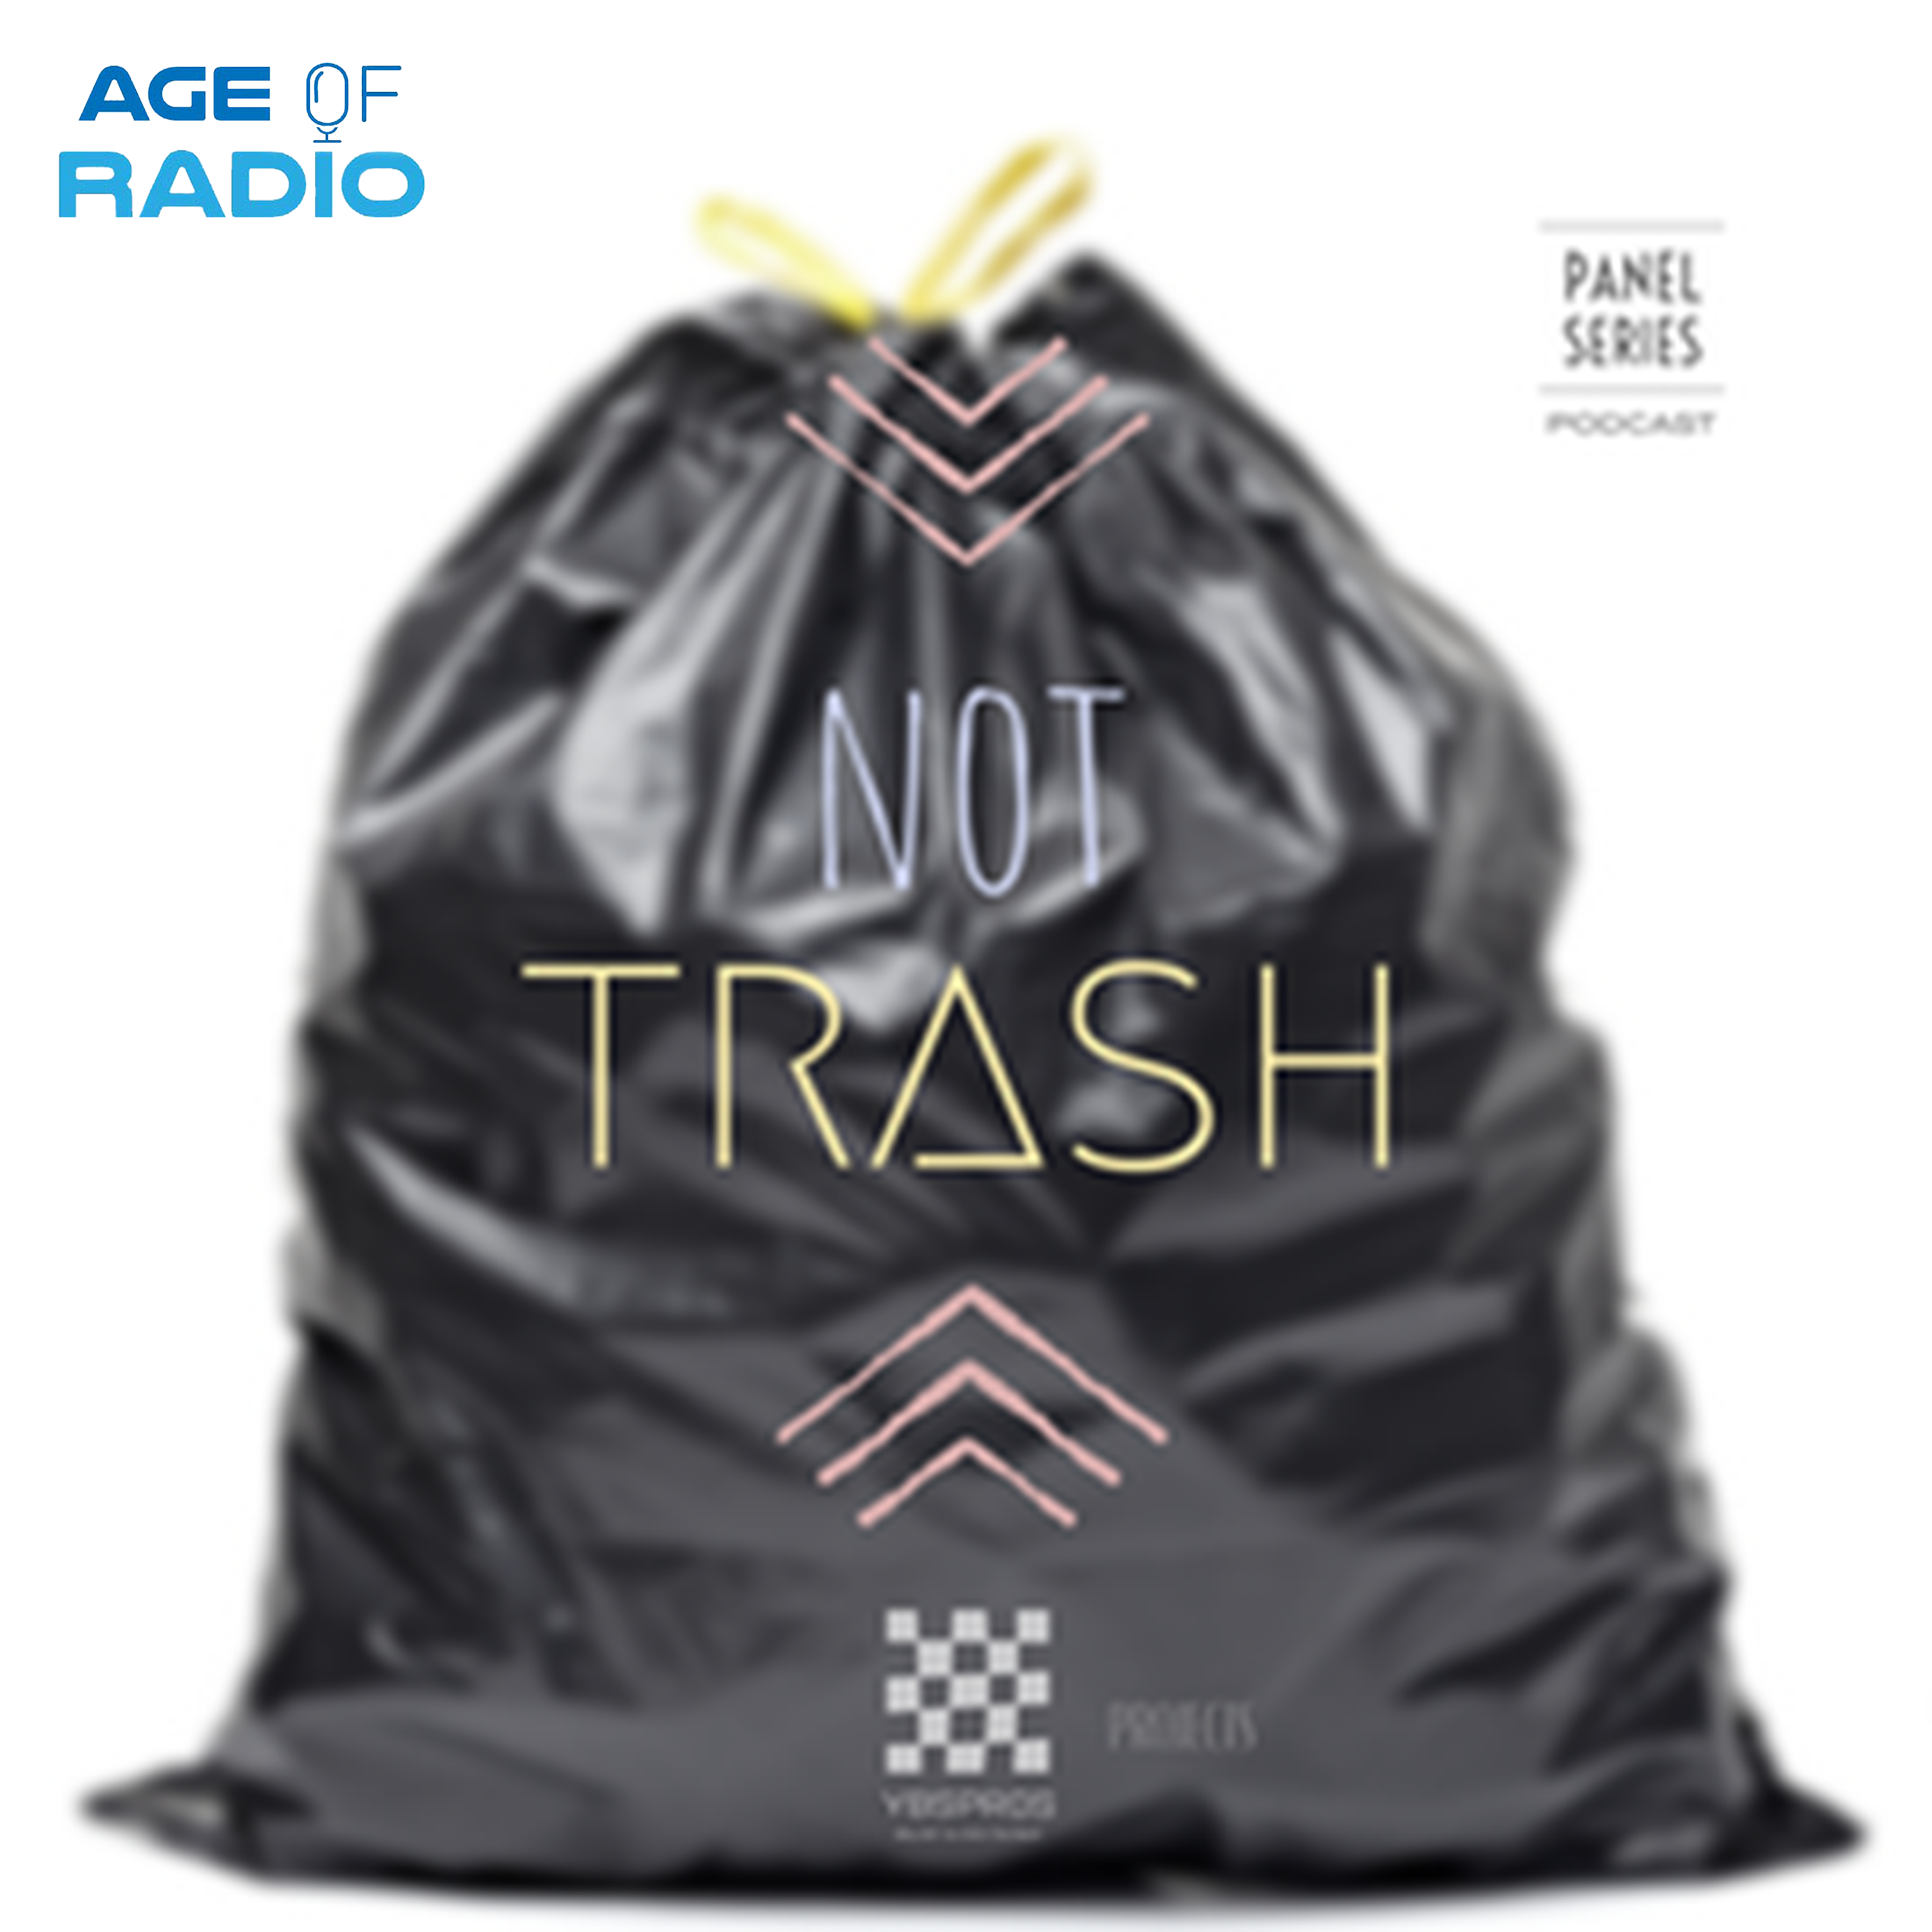 Not Trash (Panel Series)